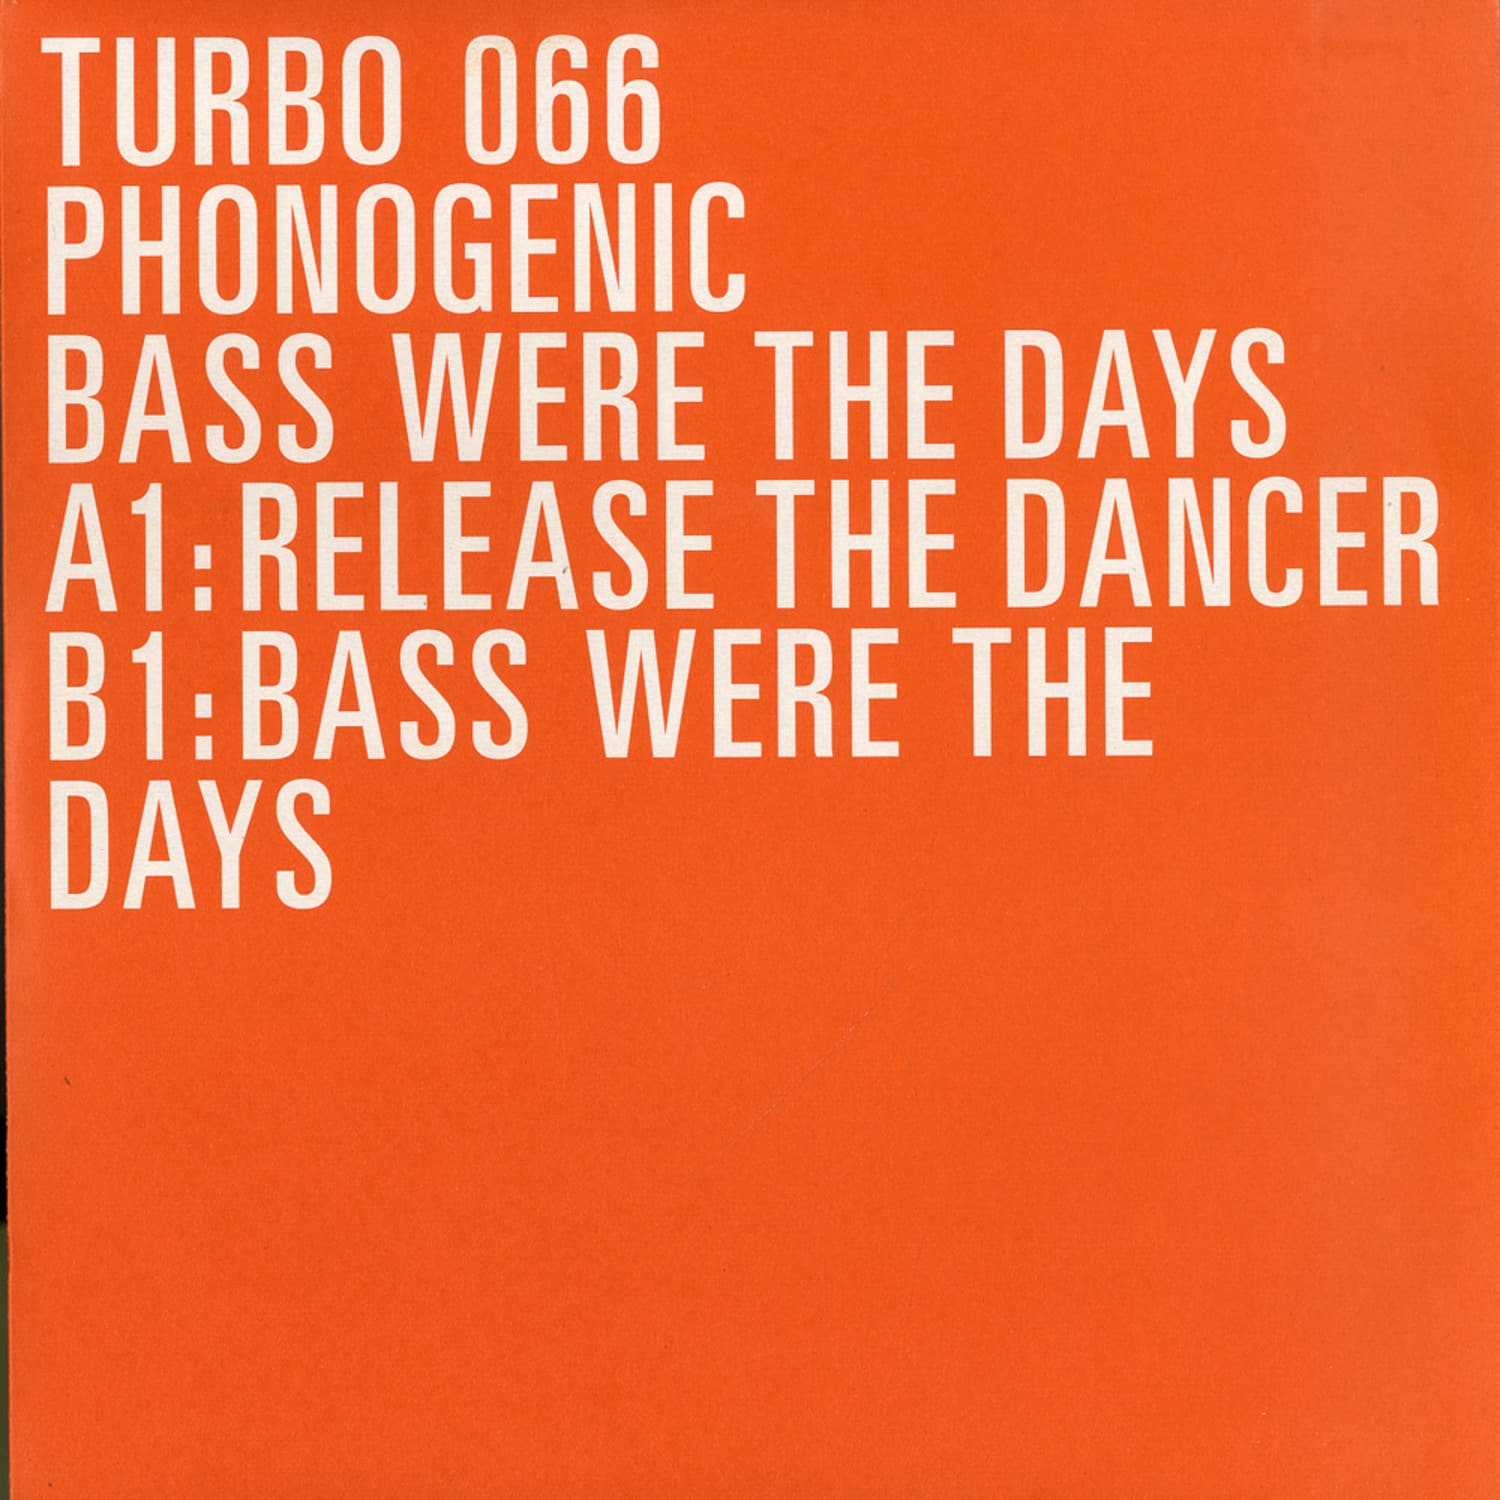 Phonogenic - BASS WERE THE DAYS